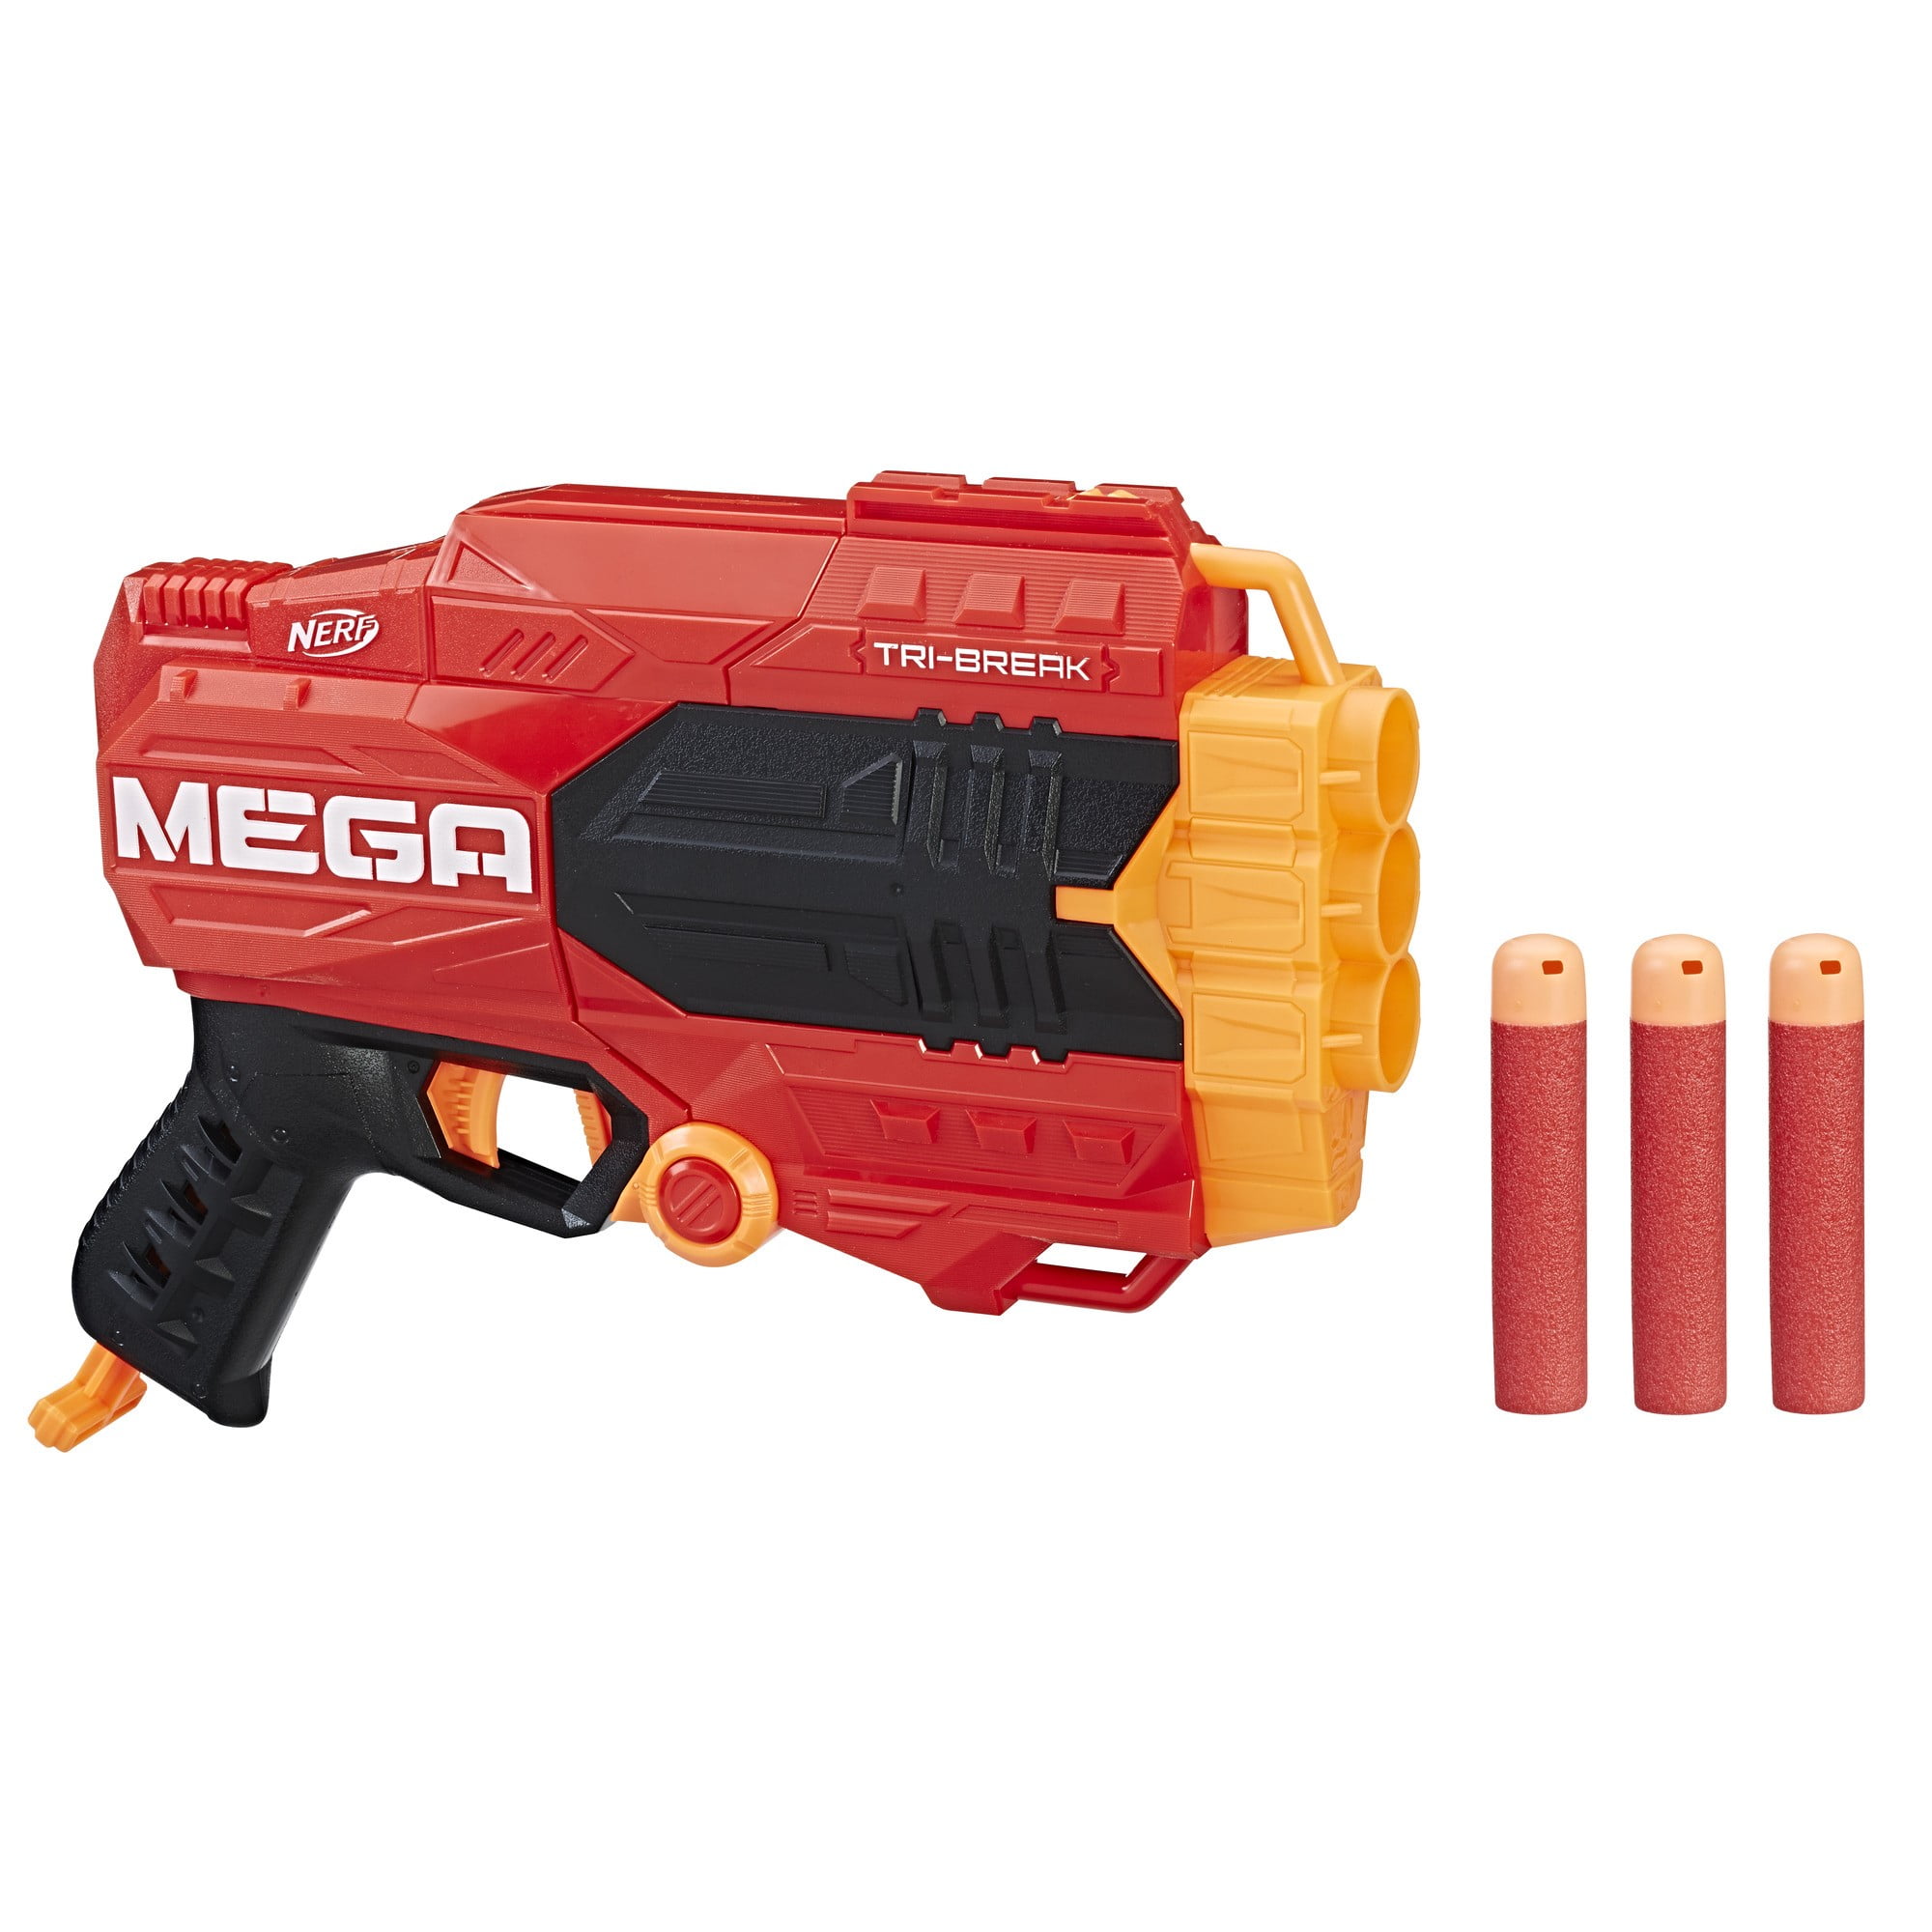 NERF N-strike Mega Tri-break Blaster Dart Gun Toy 3 Darts for sale online 